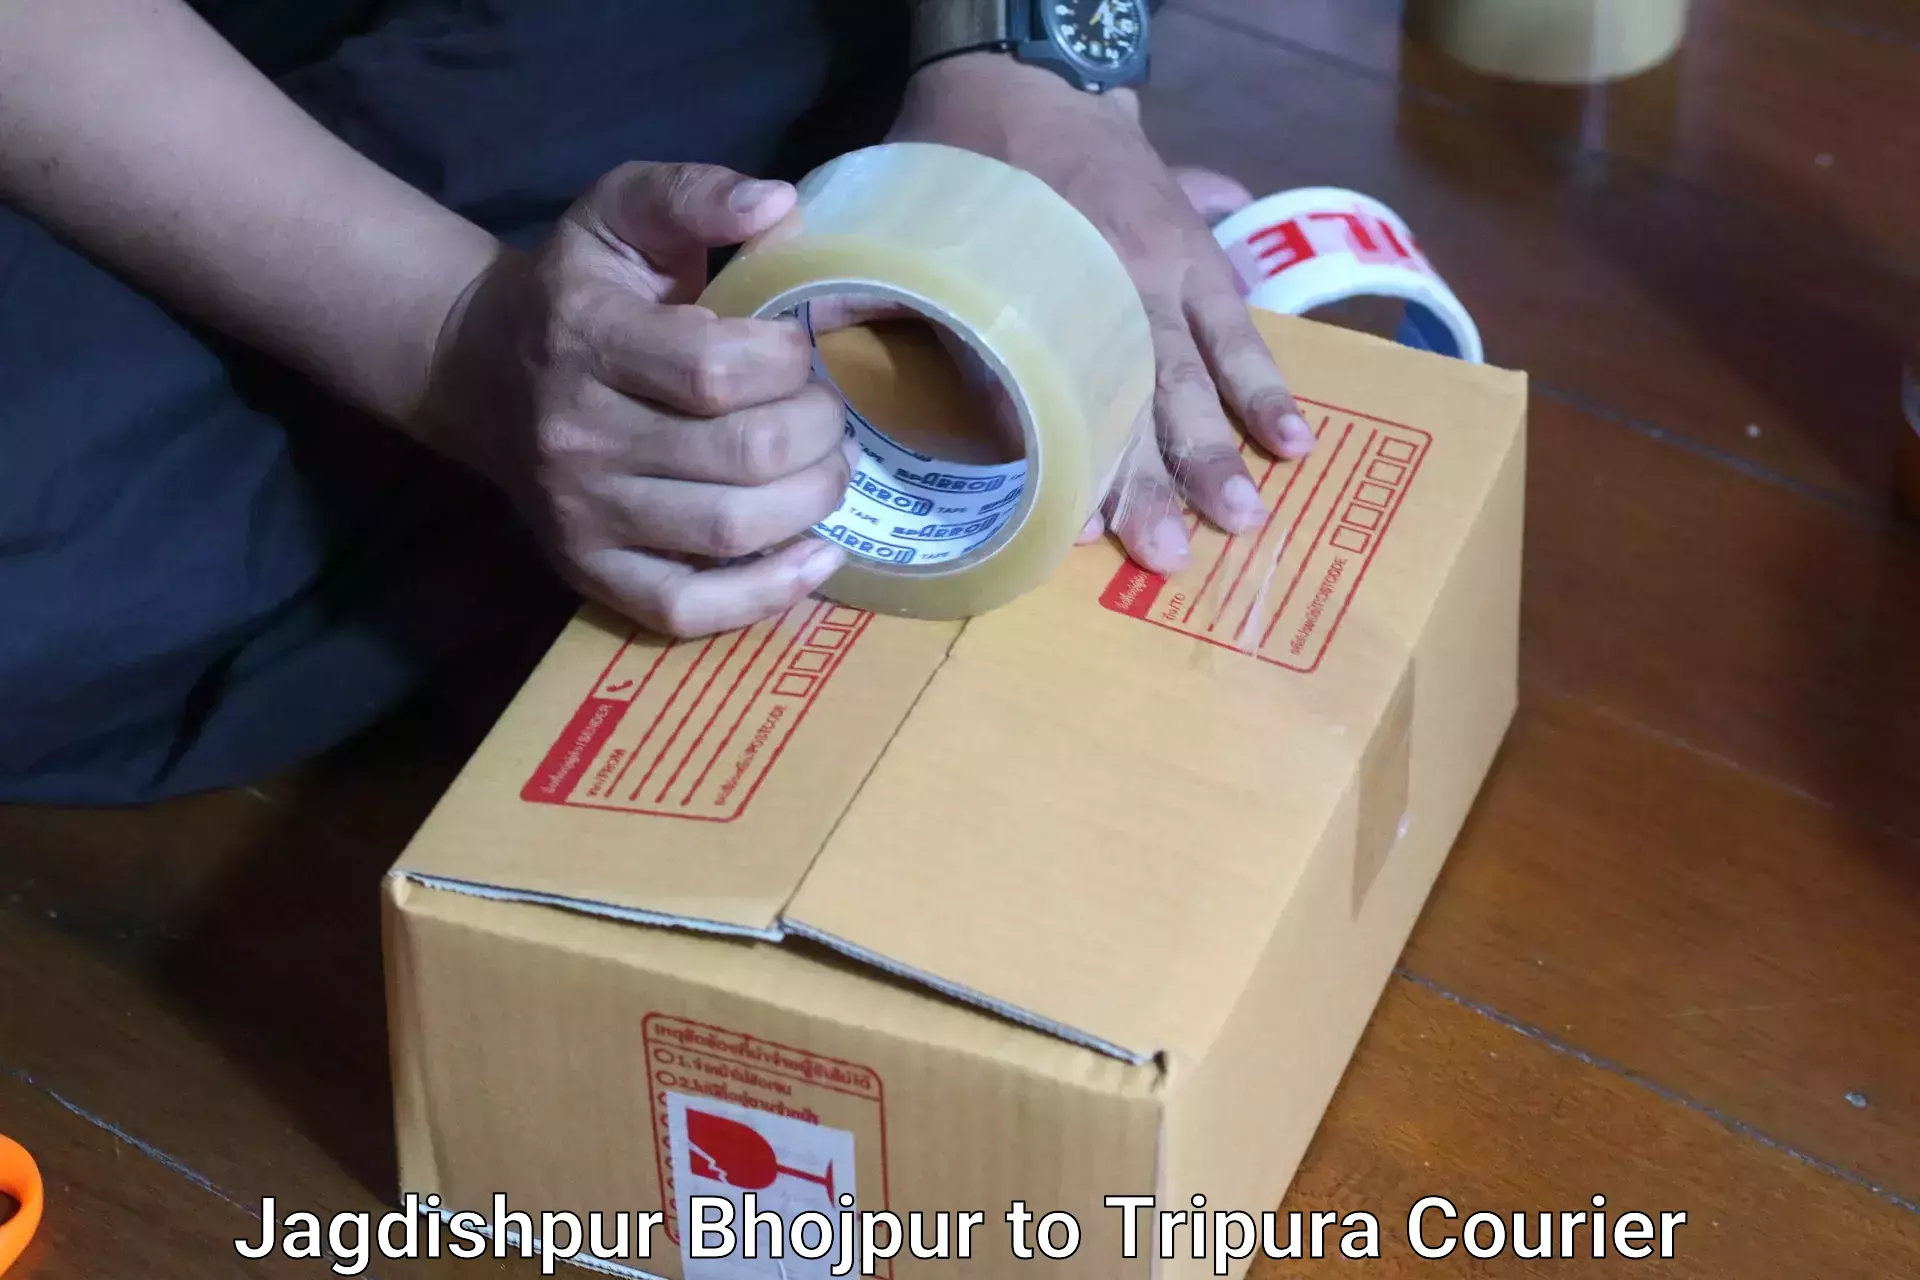 Luggage delivery app Jagdishpur Bhojpur to Udaipur Tripura